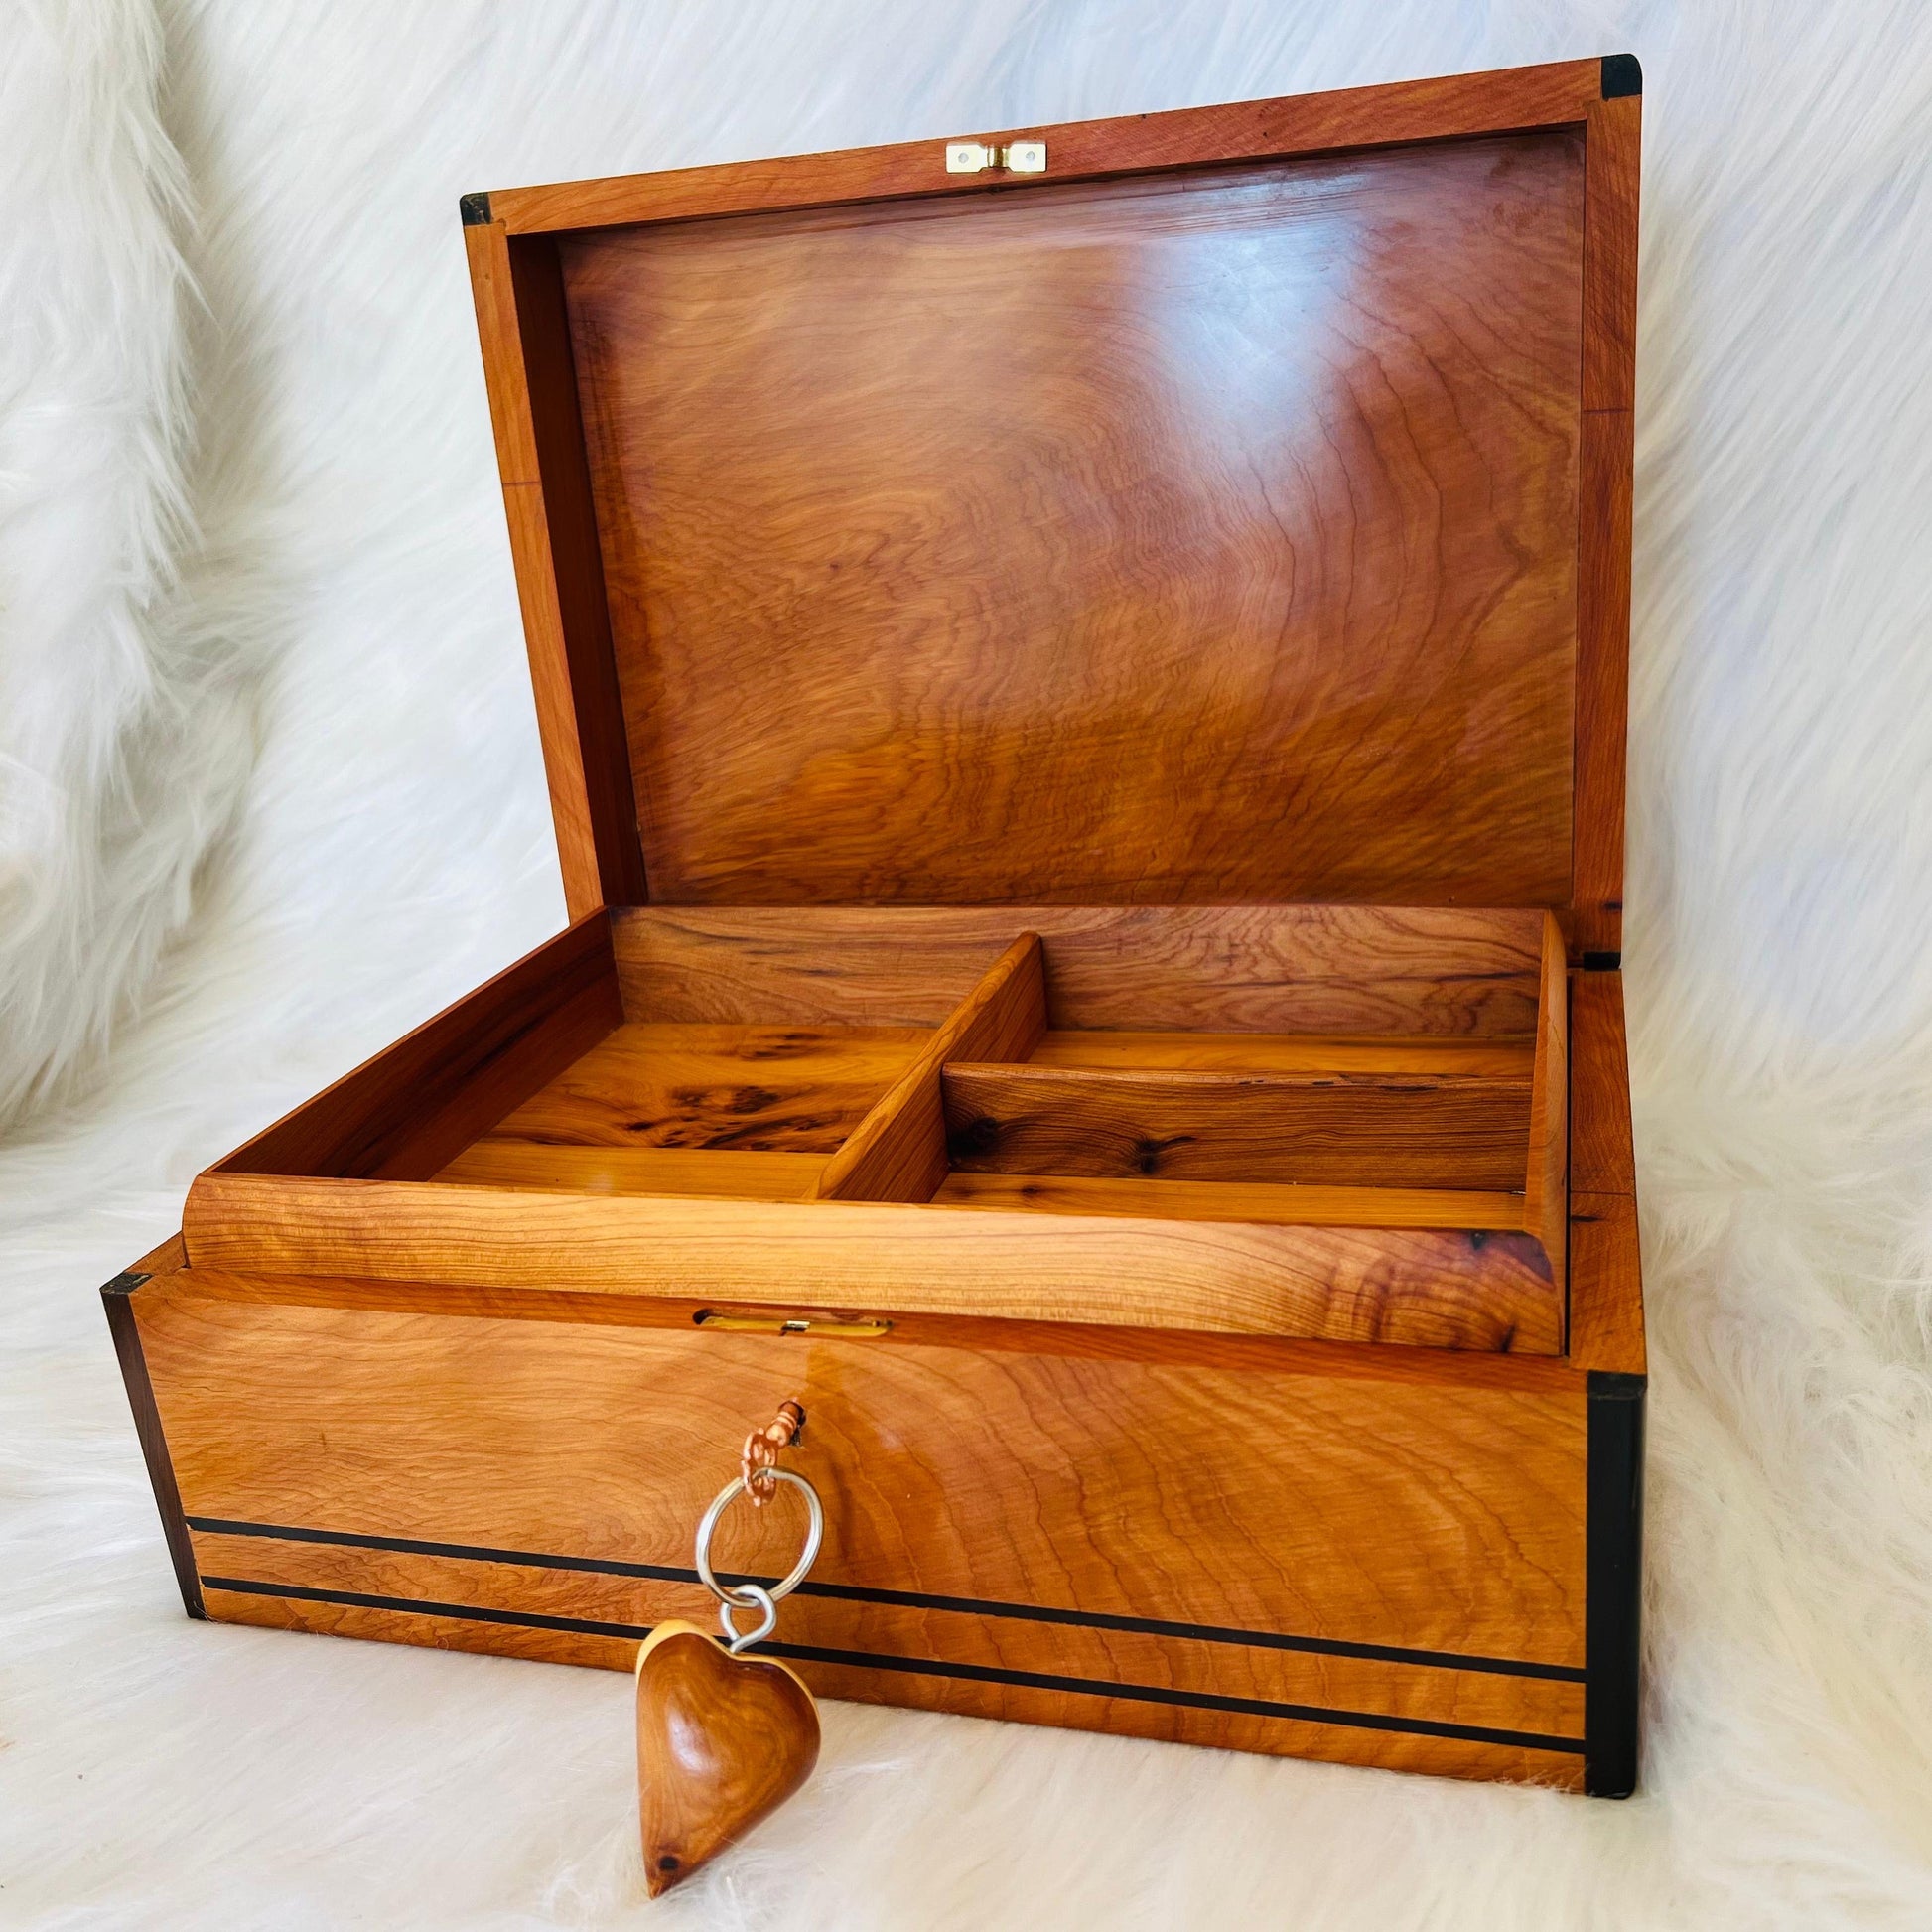 12"x9" Moroccan jewelry Box,large lockable thuya wooden burl Jewelry Box organizer with key,Christmas Couples gift,wedding wood memory box